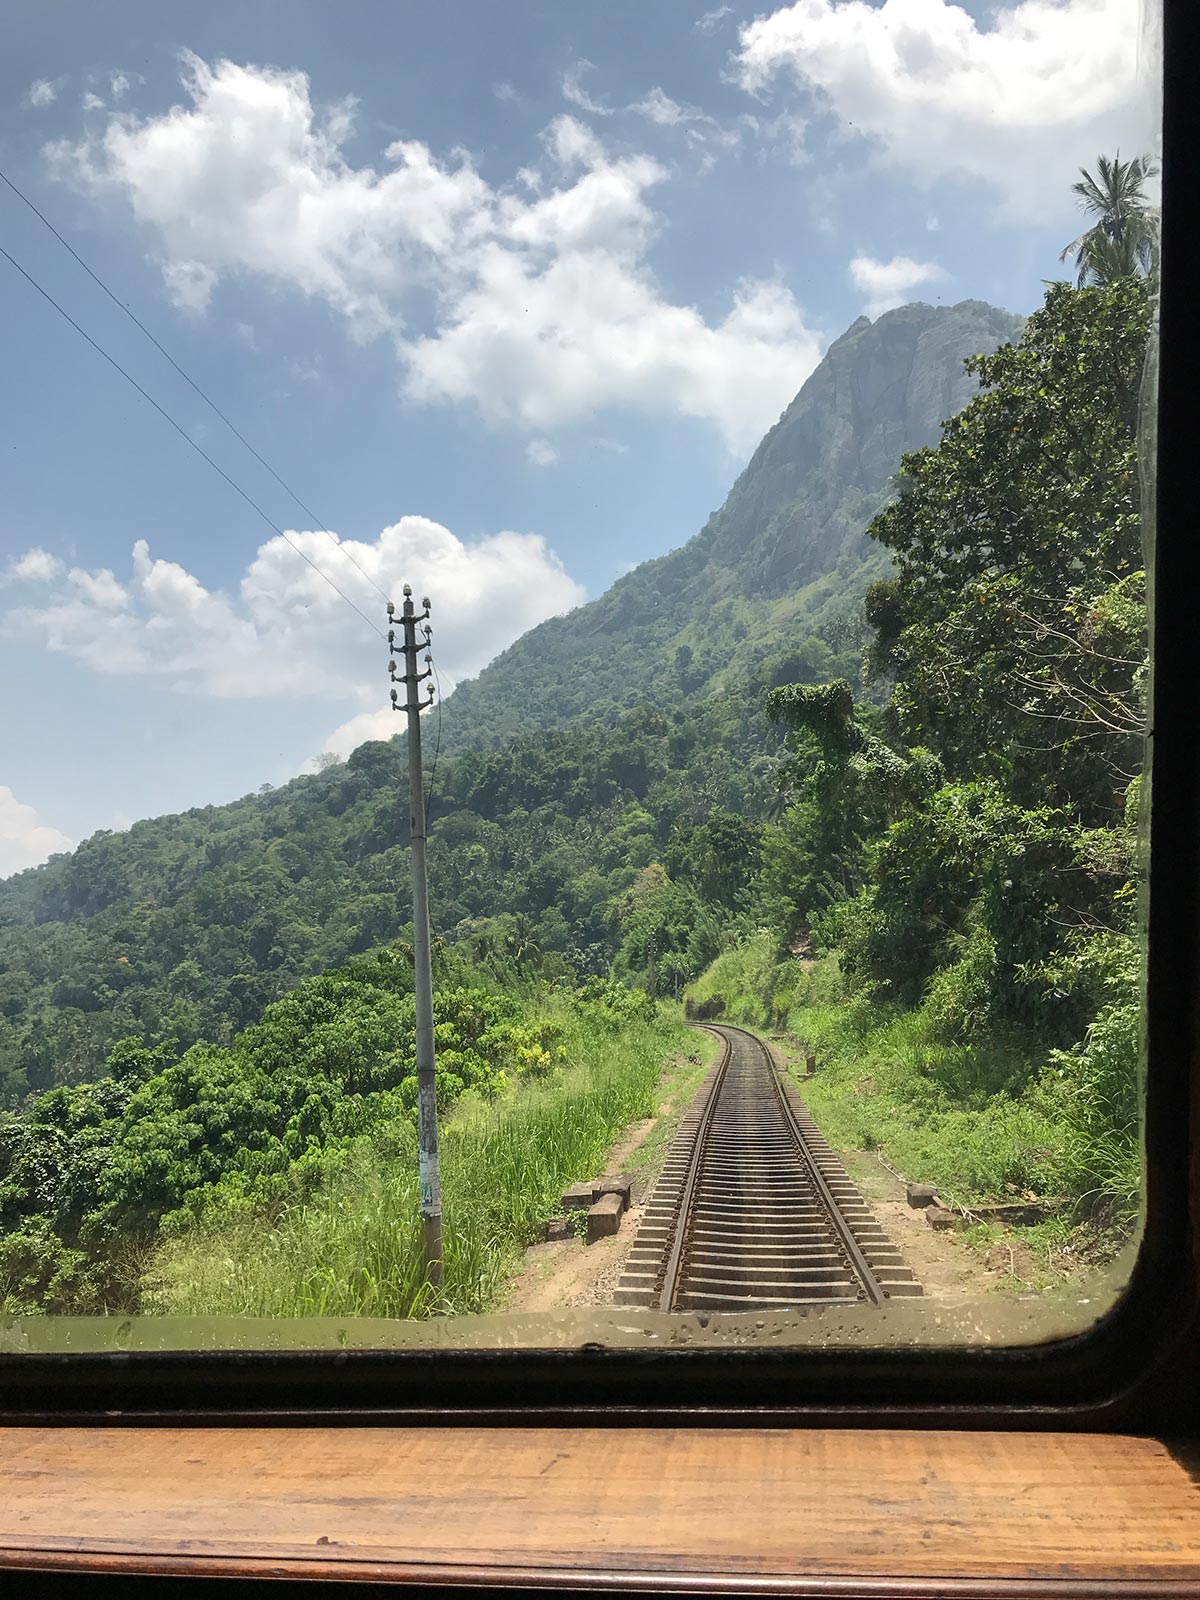 Railroad thru vegetation in Sri Lanka. The train ride of a lifetime pt1 Adam's peak